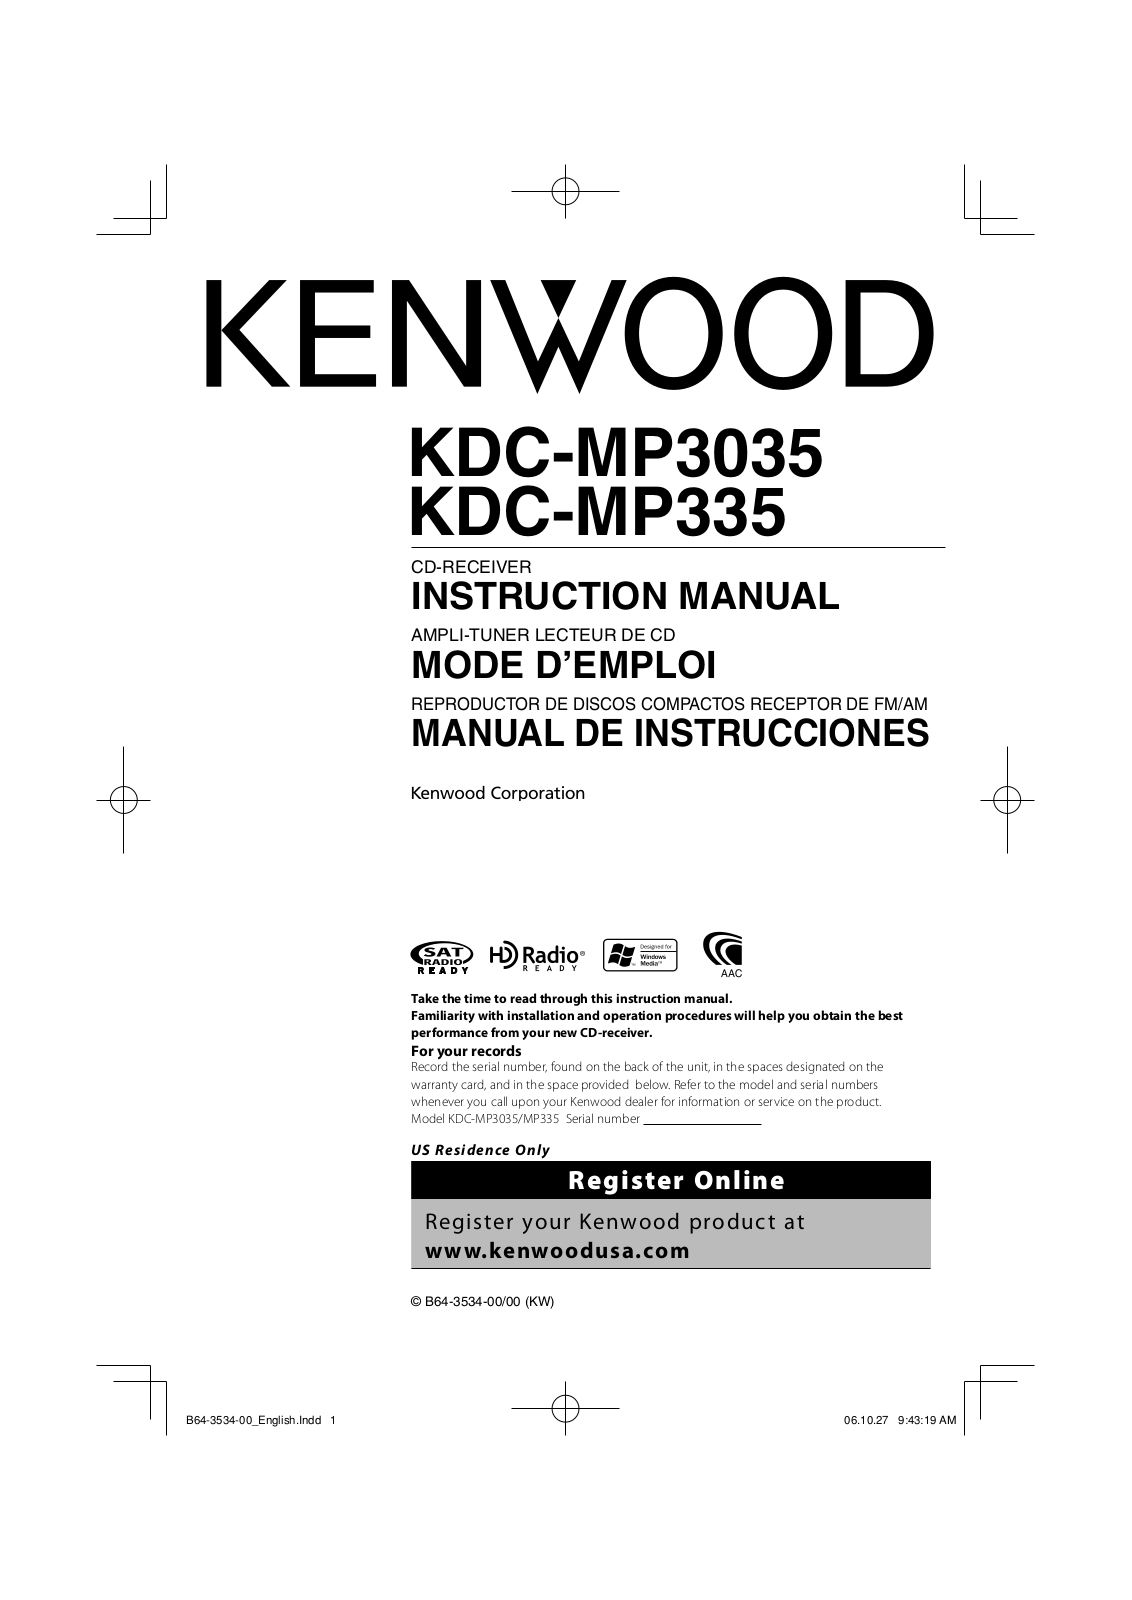 Kenwood KDC-MP335, KDC-MP3035 User Manual